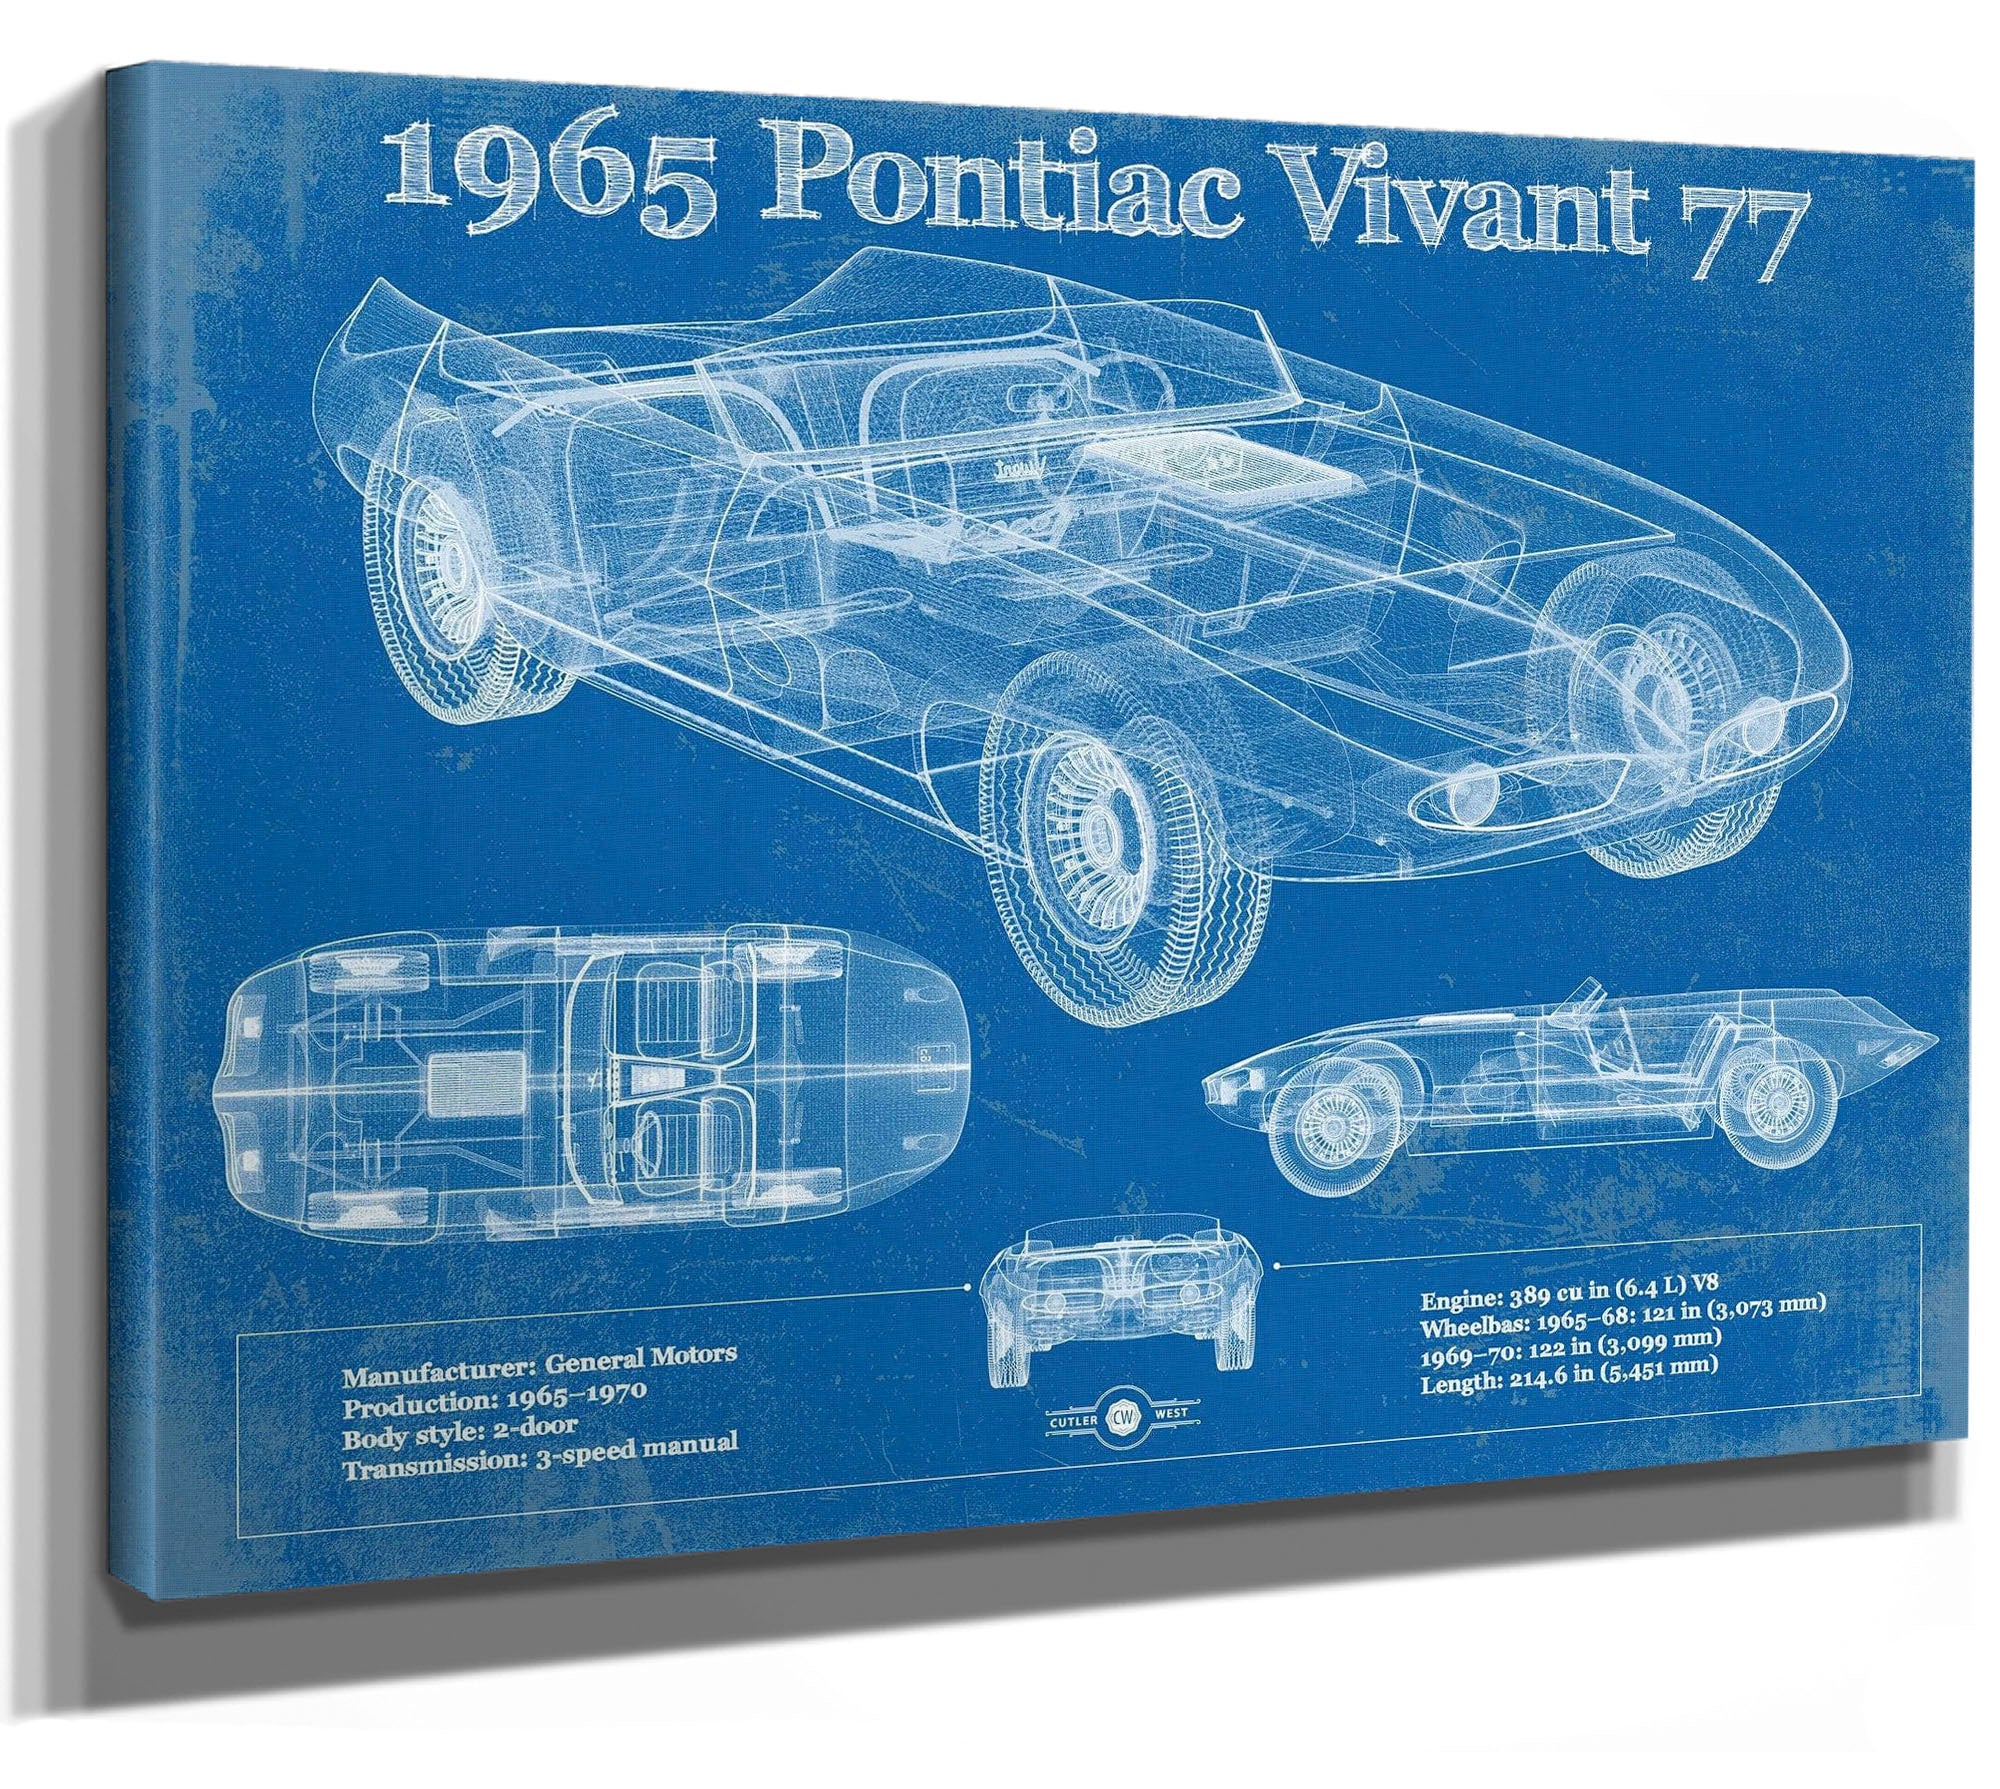 1965 Pontiac Vivant 77 Vintage Blueprint Auto Print